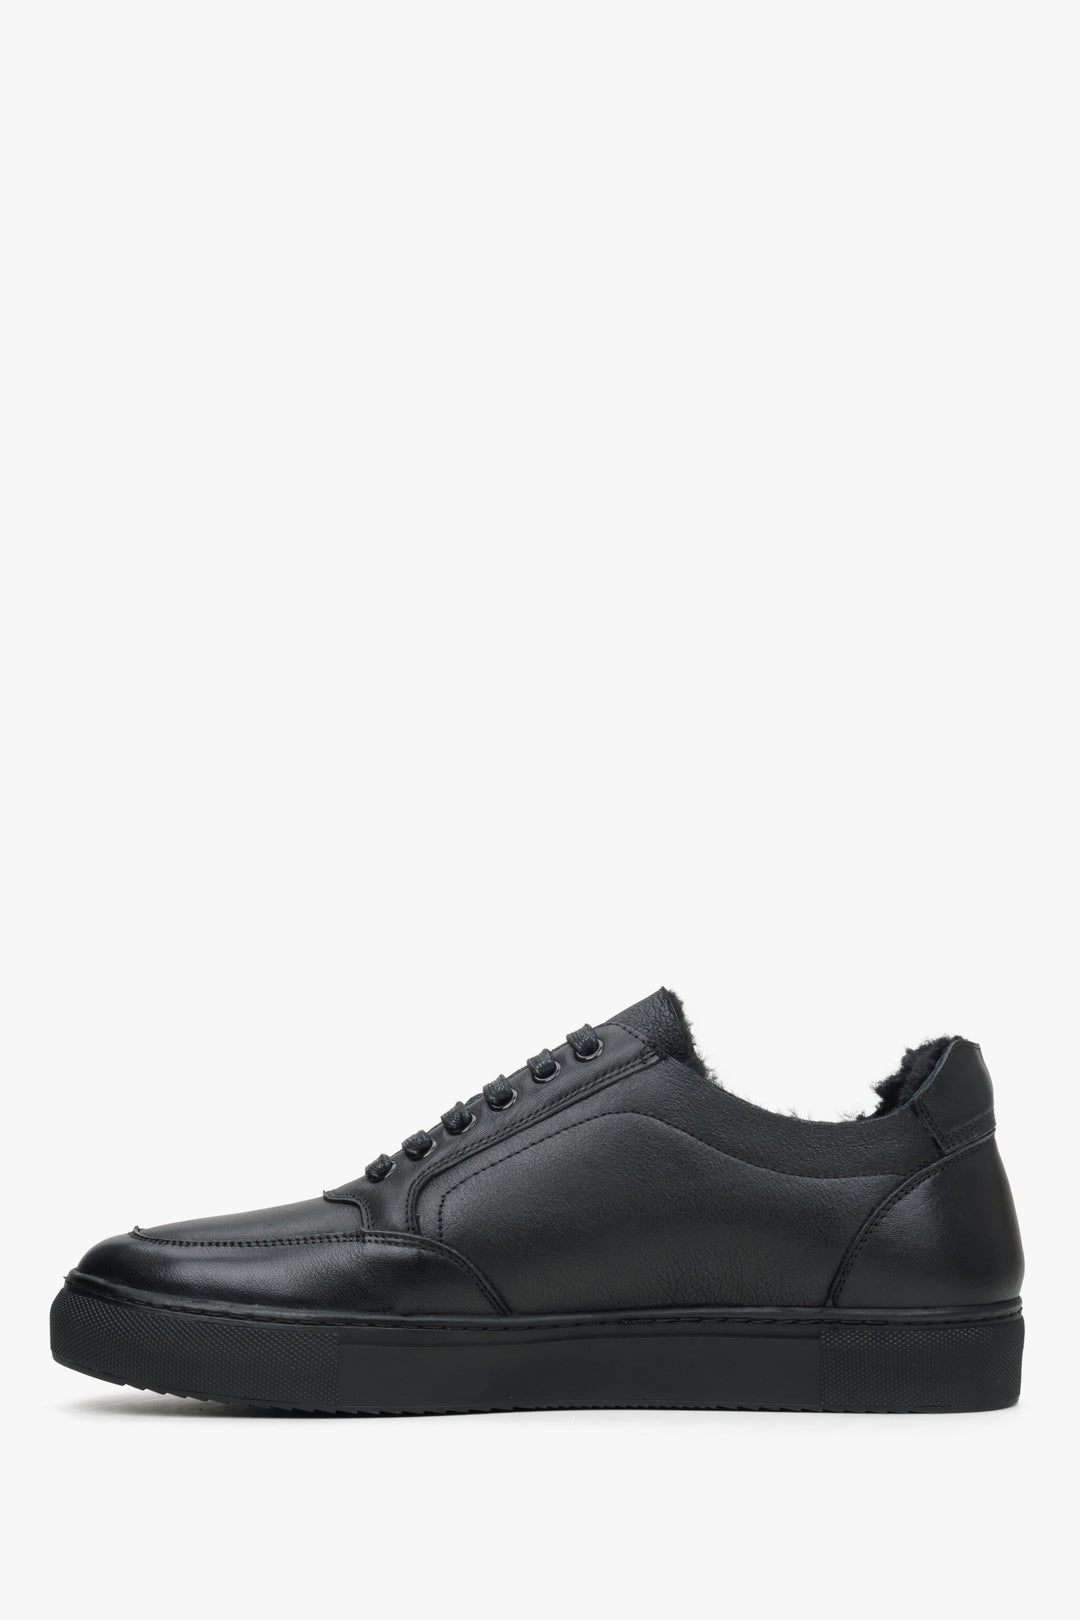 Women's black leather sneakers by Estro - shoe profile.